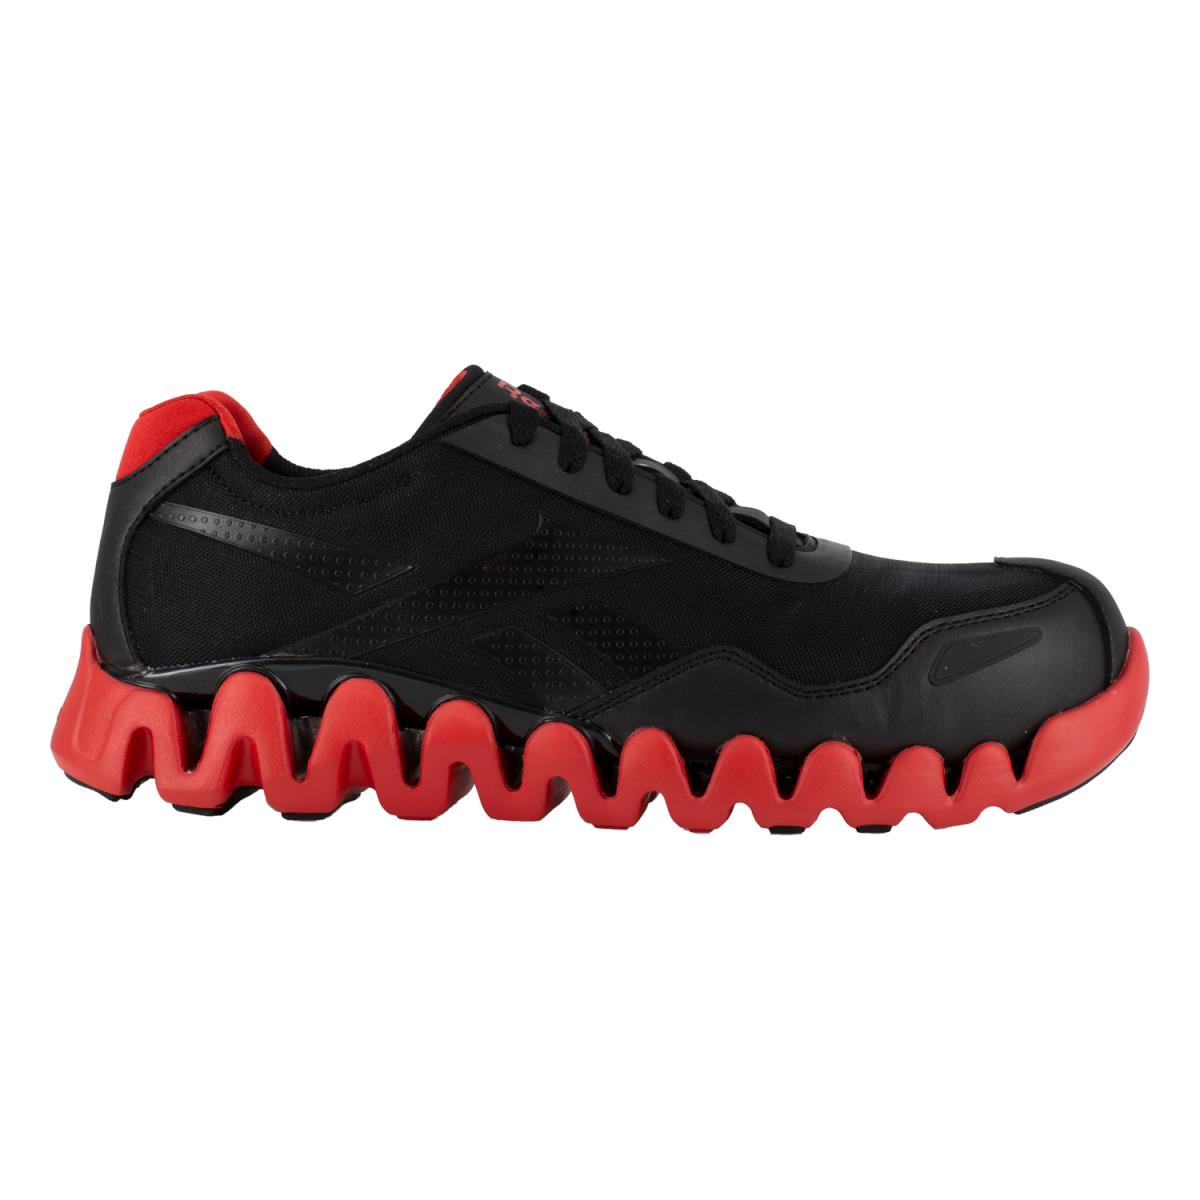 Reebok Mens Black/red Mesh Work Shoes Zig Pulse Athletic CT M